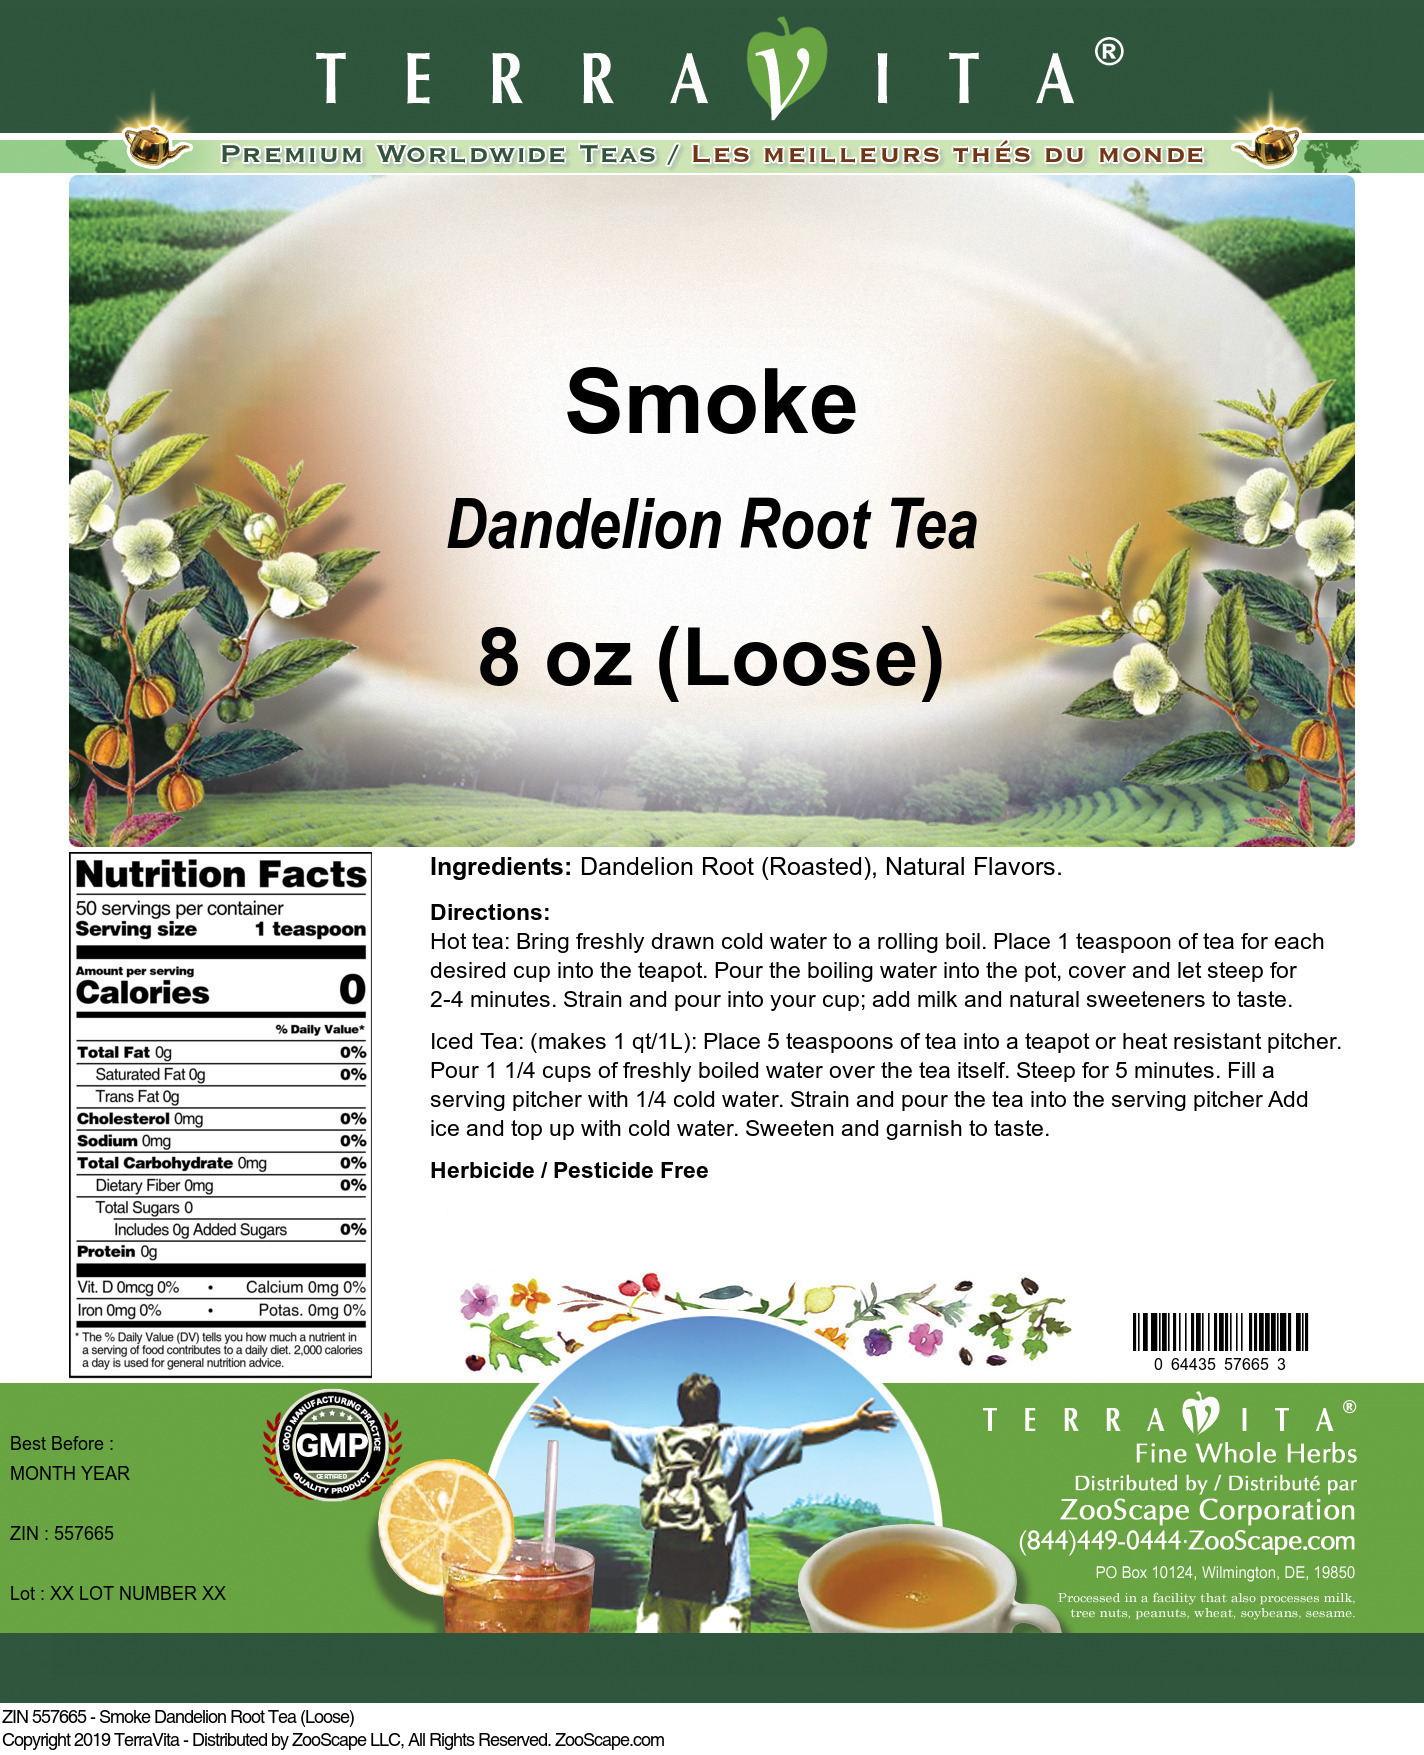 Smoke Dandelion Root Tea (Loose) - Label